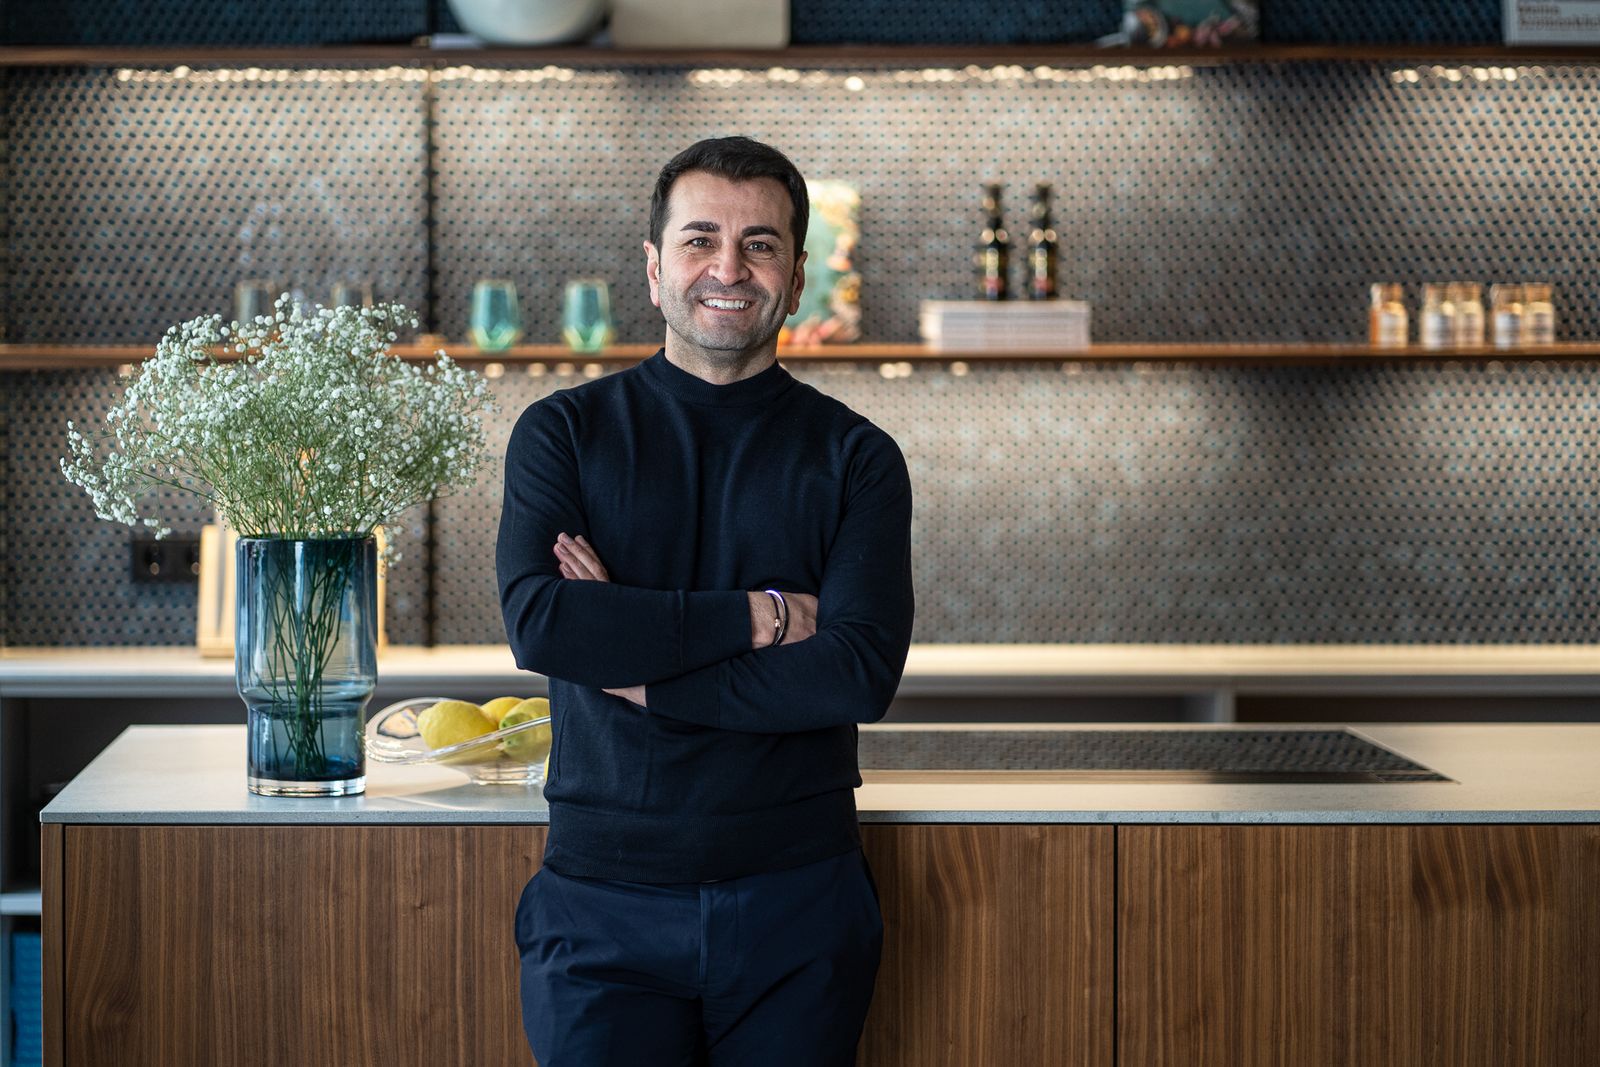 Ali Güngörmüş in front of his next125 kitchen